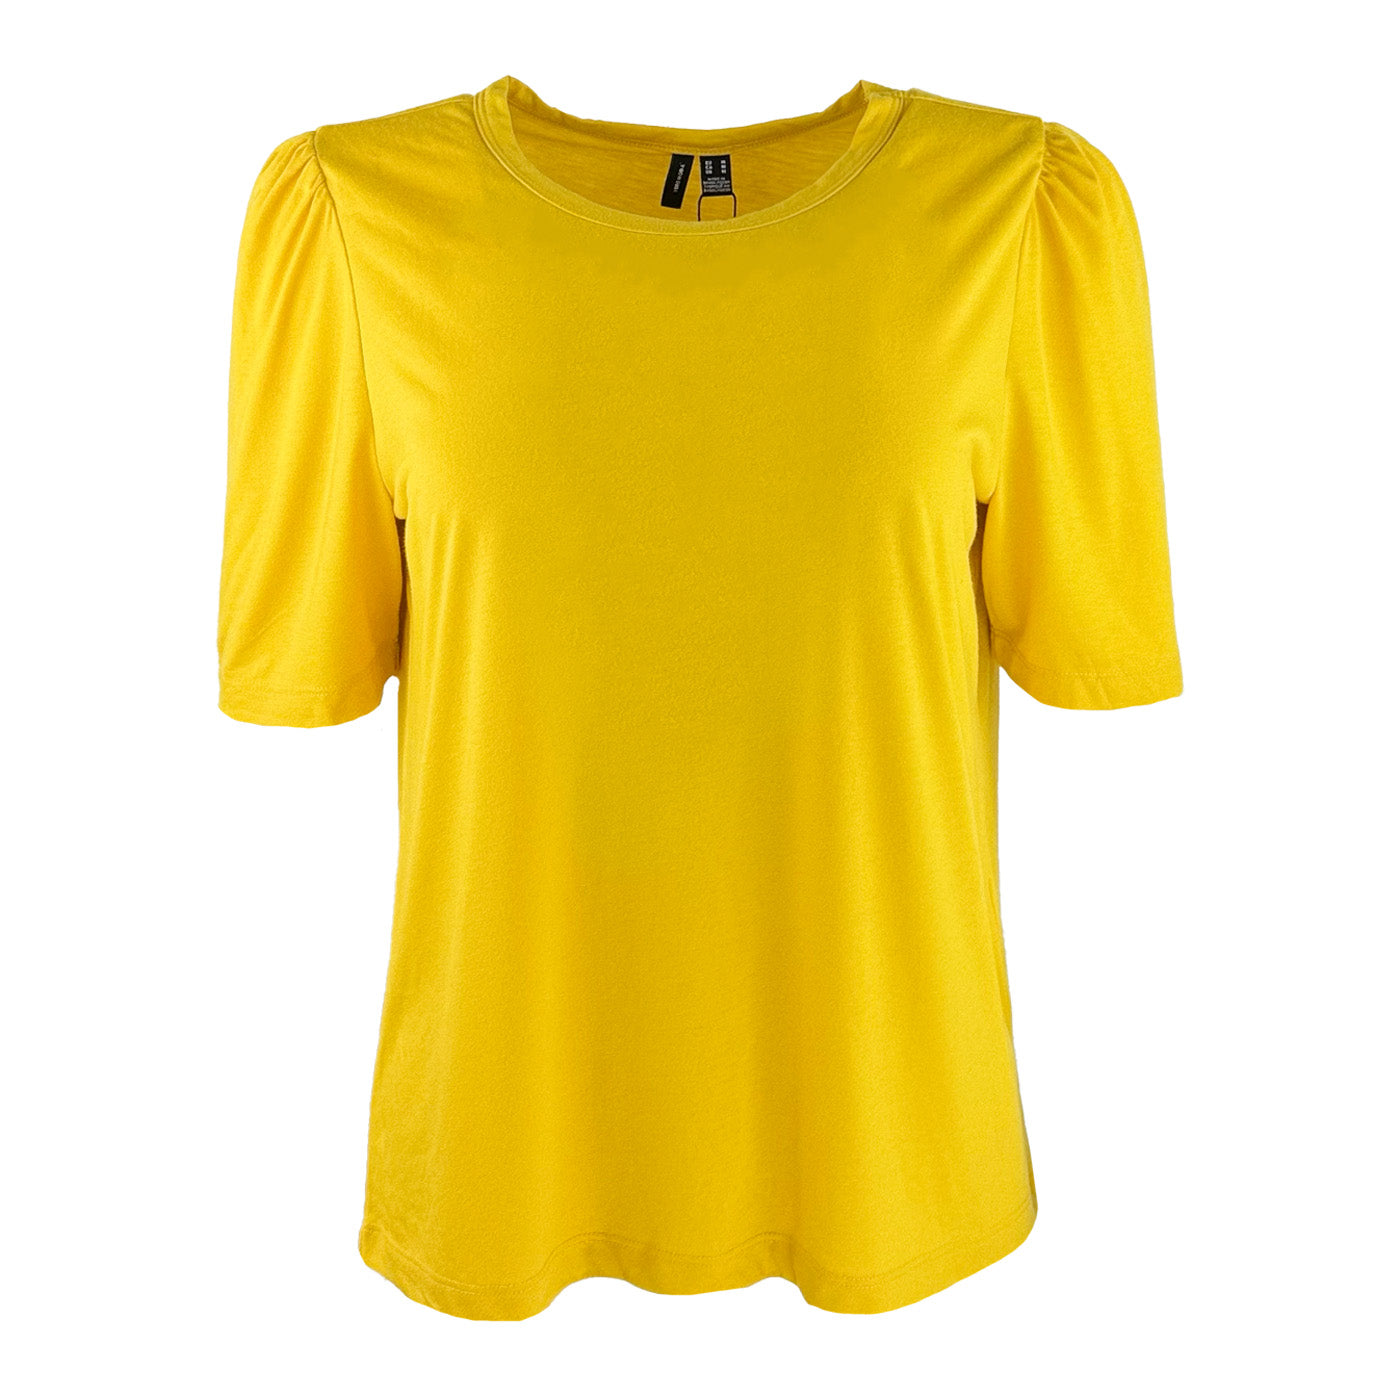 Дамска жълта тениска Vero Moda - 0